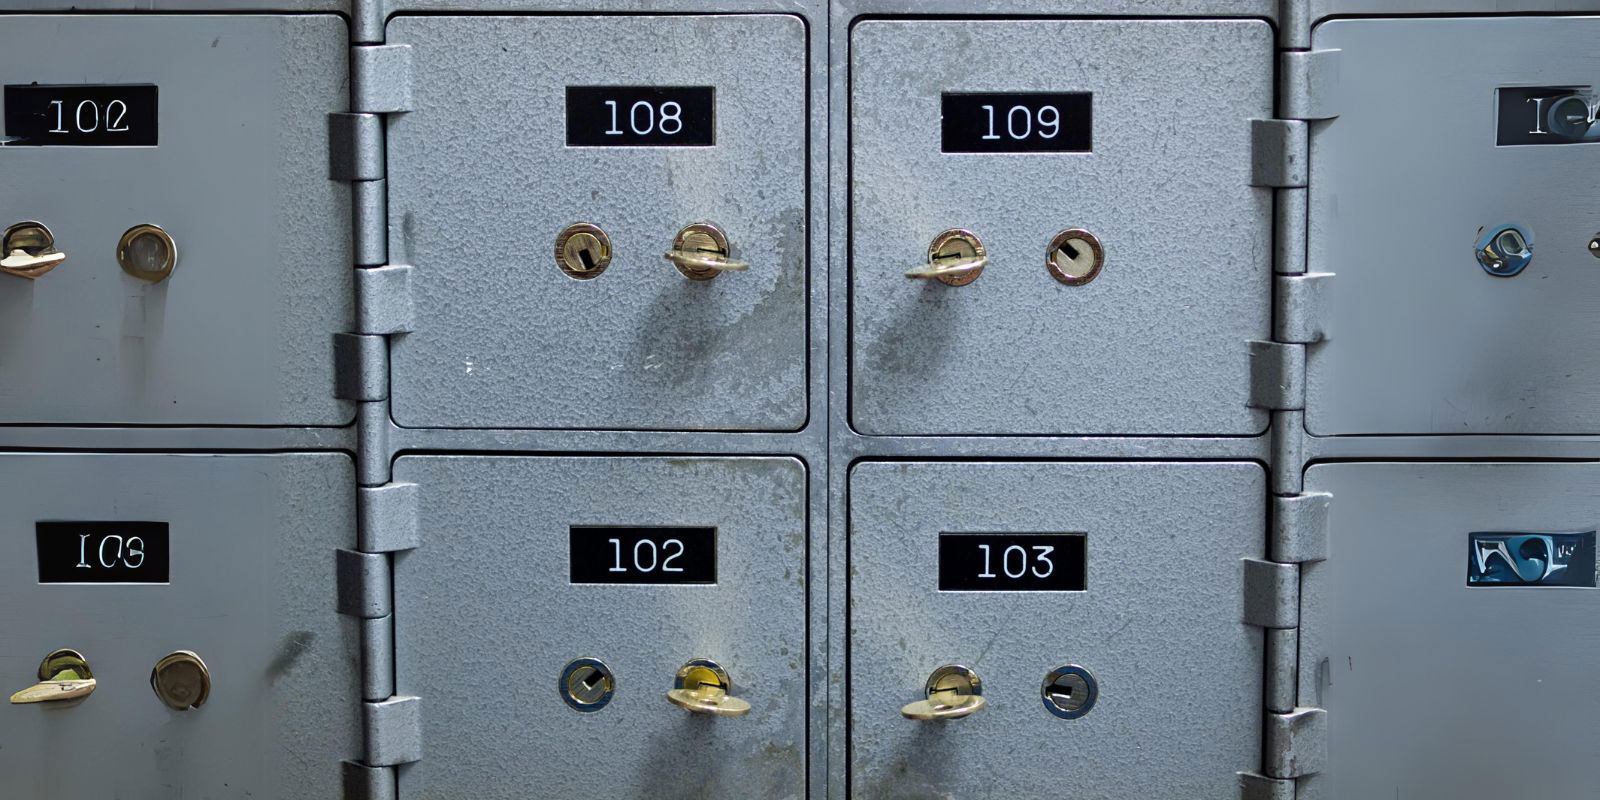 Specially designed safe deposit box